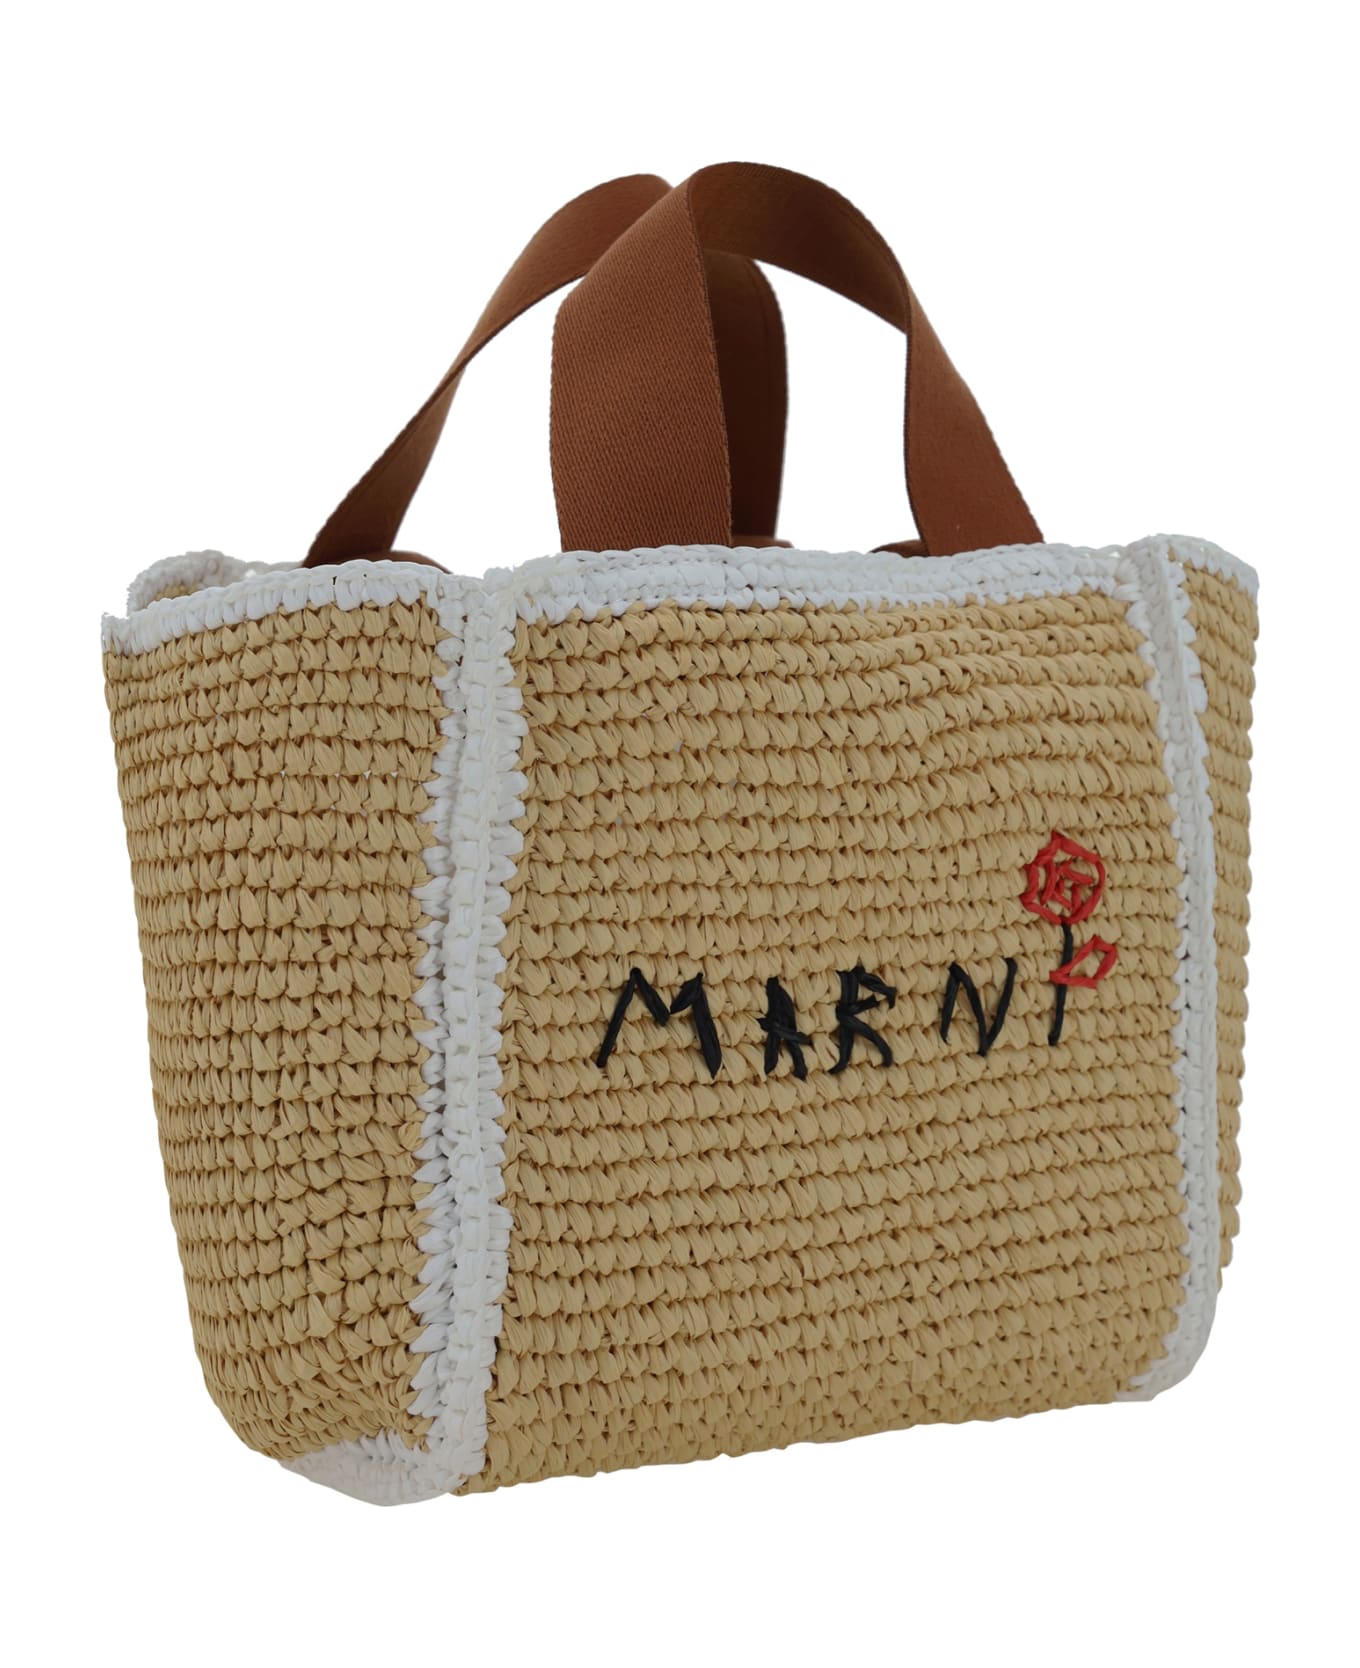 Marni Sillo Handbag - Natural/white/rust